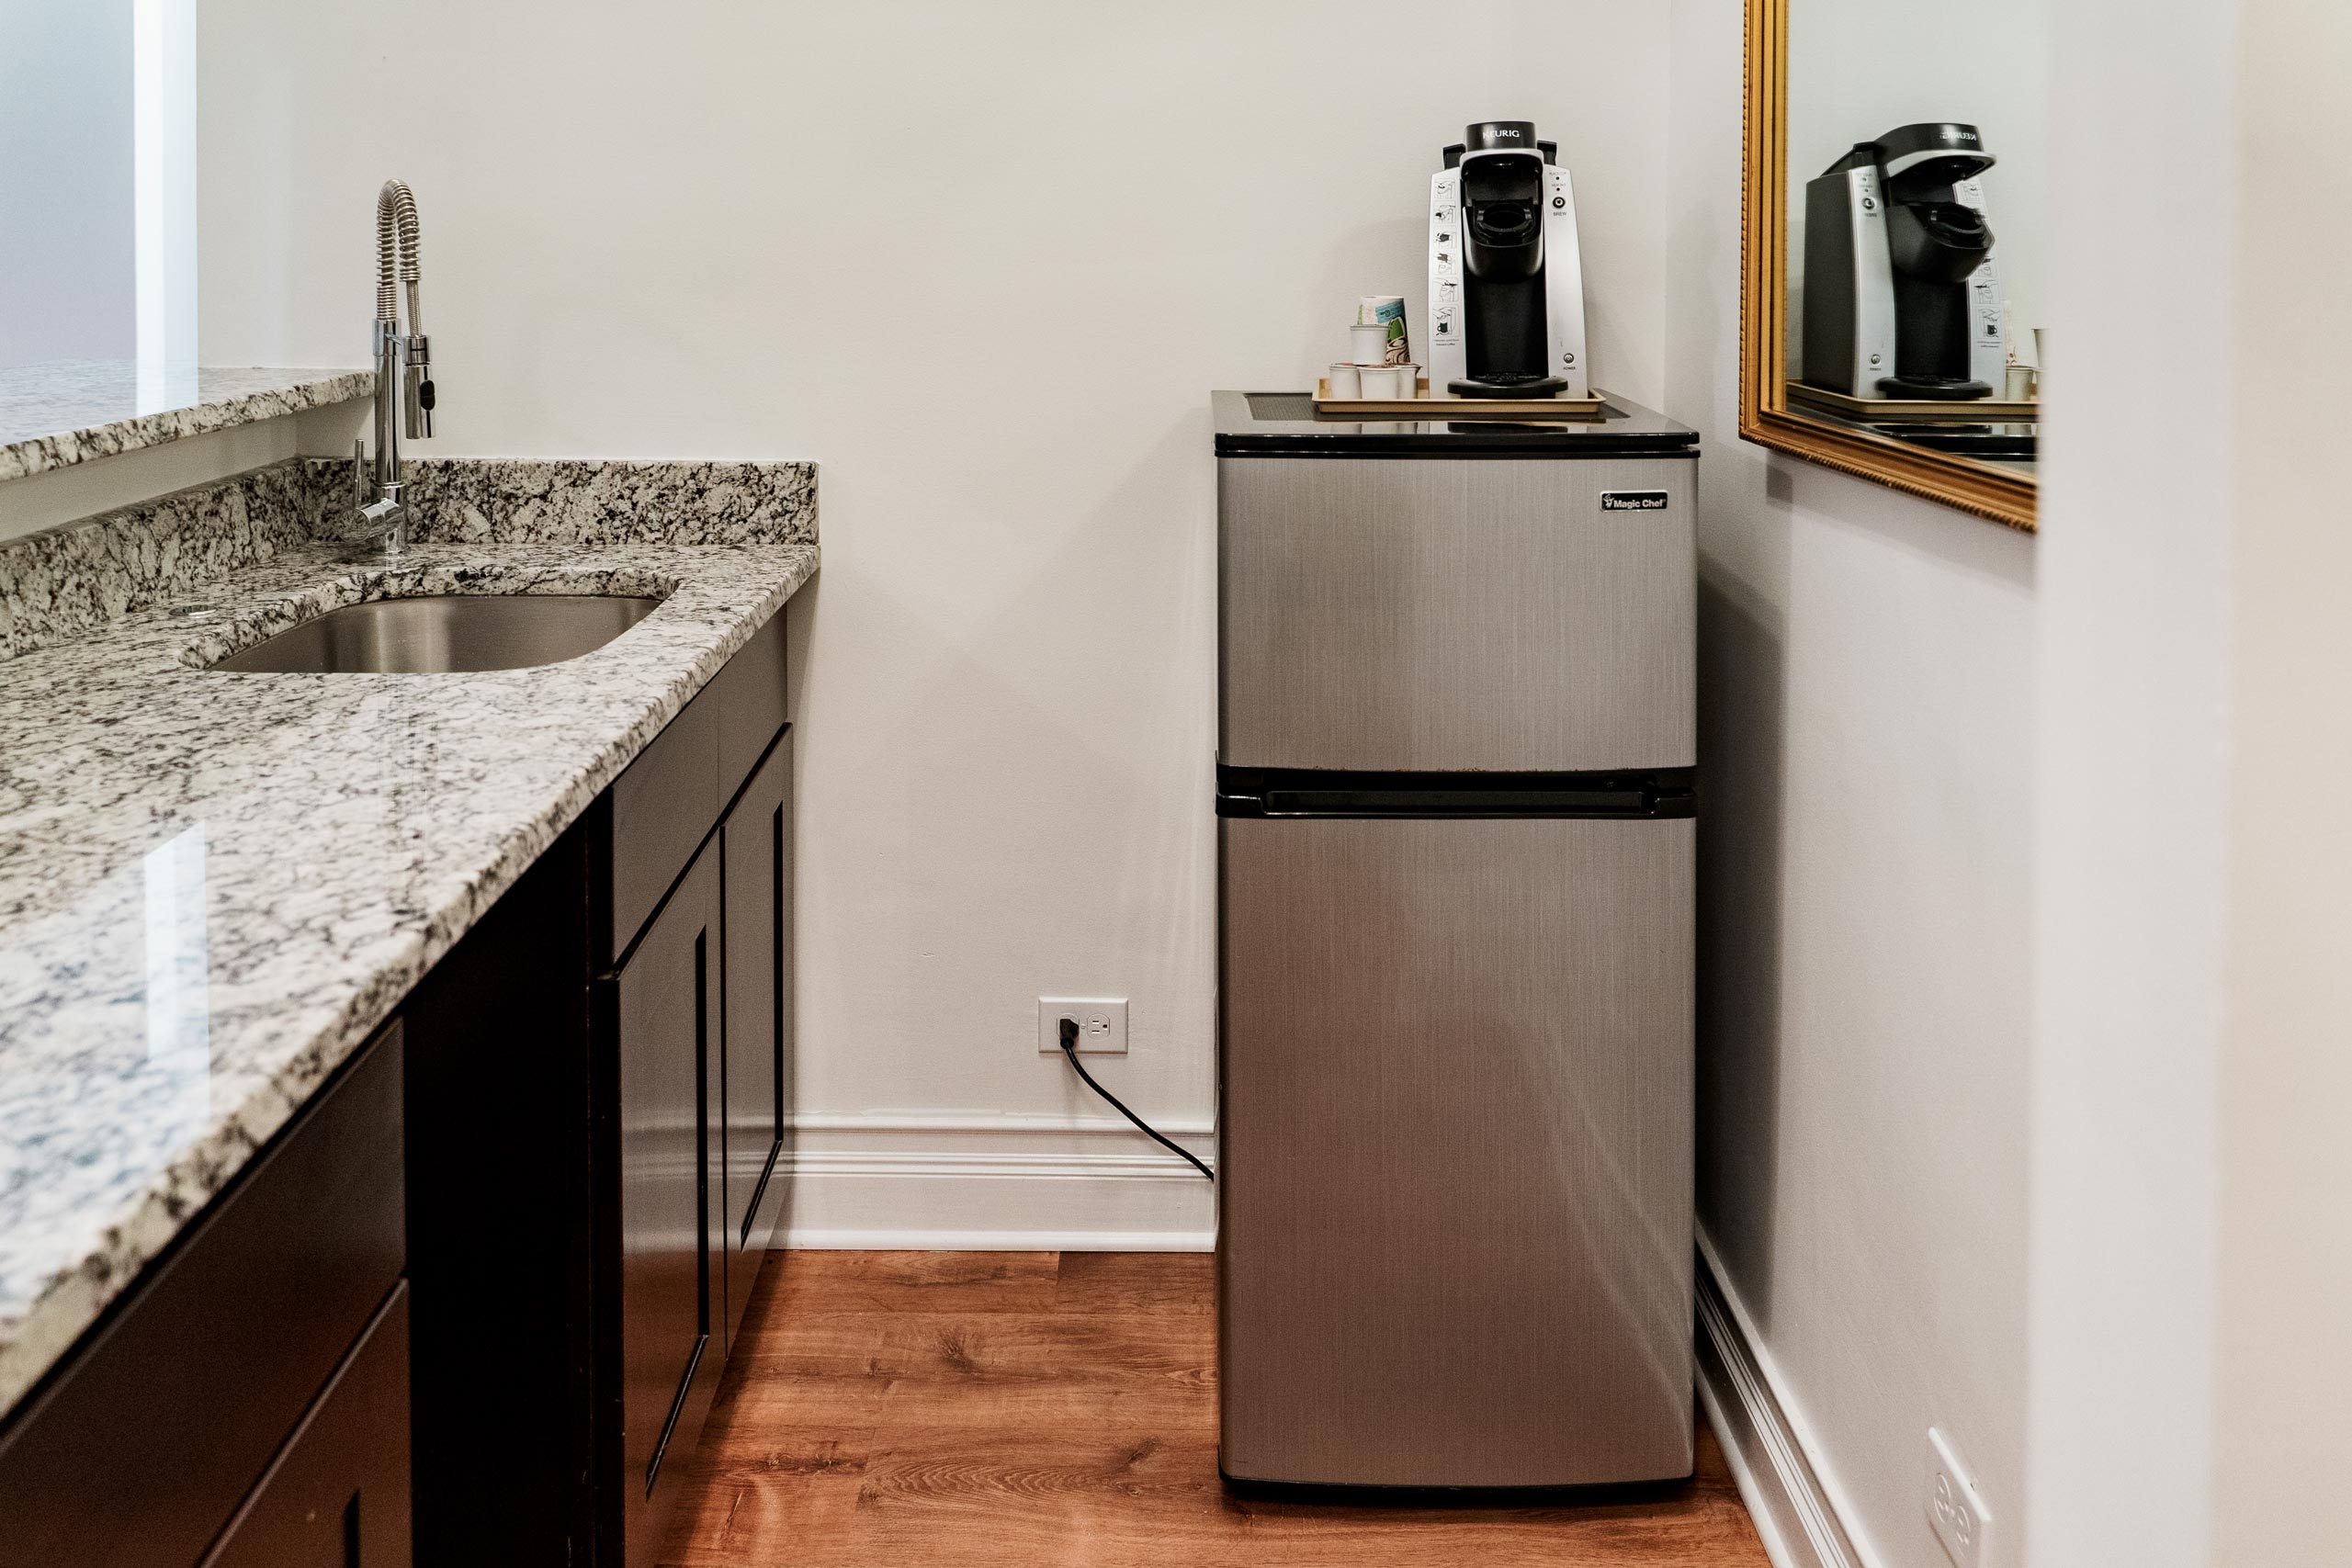 Mini refrigerator, coffee machine and sink